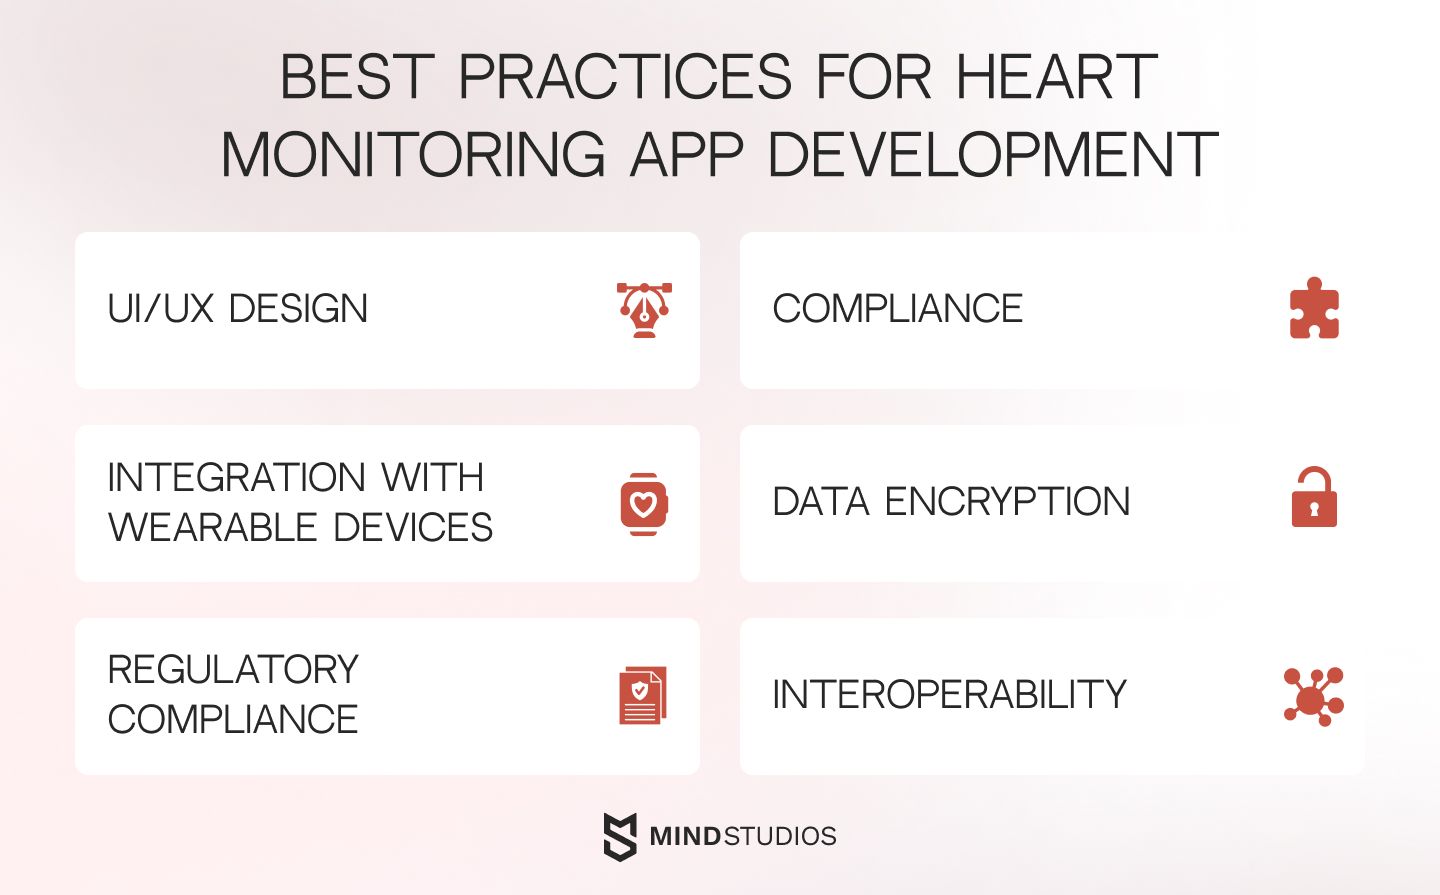 Best practices for heart monitoring app development